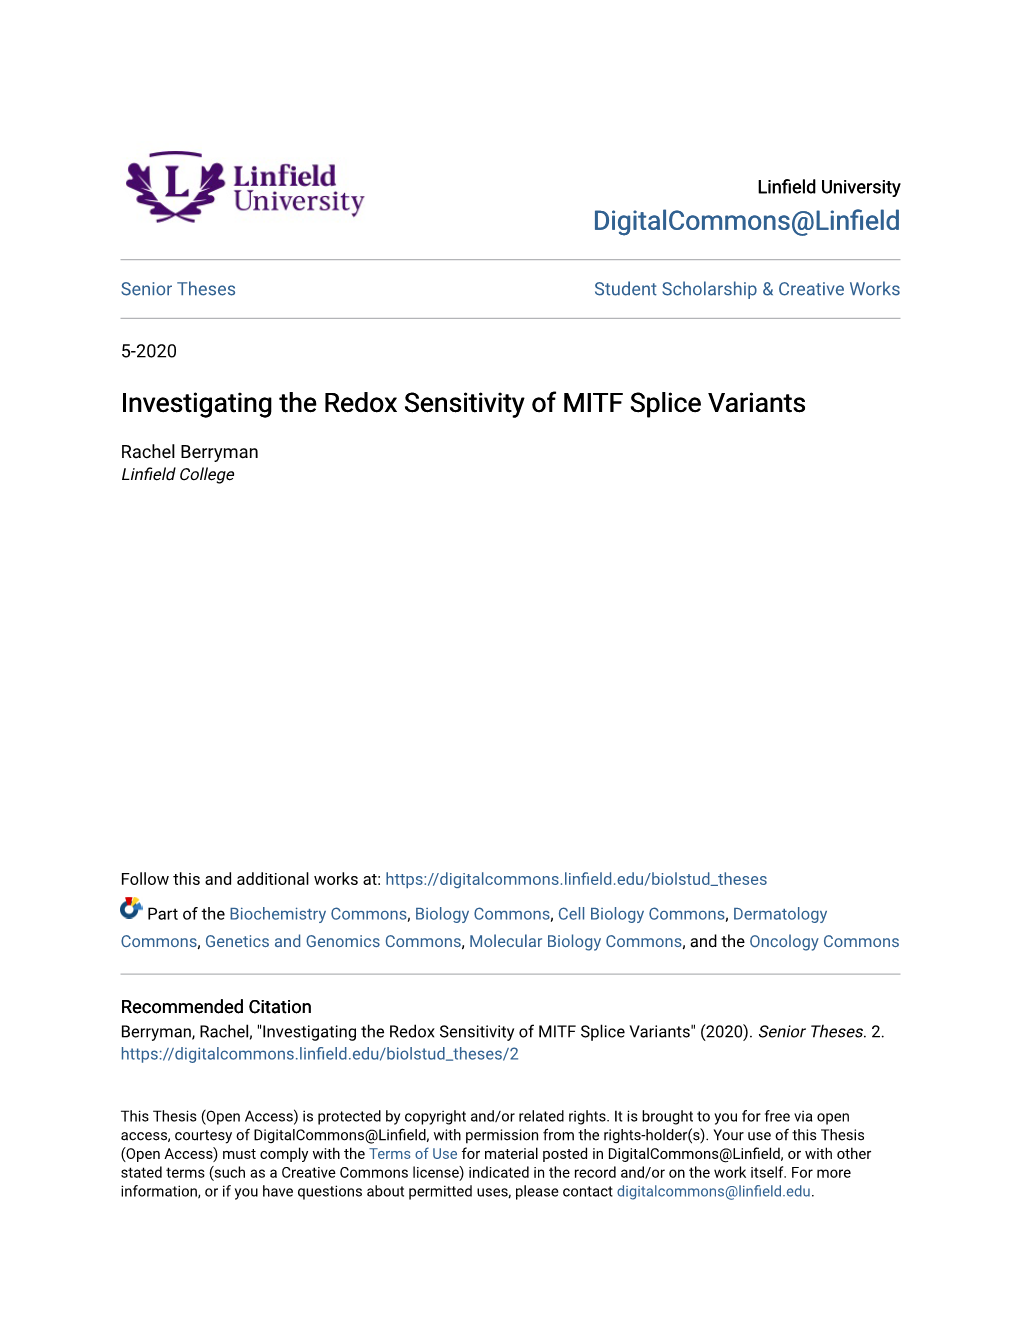 Investigating the Redox Sensitivity of MITF Splice Variants